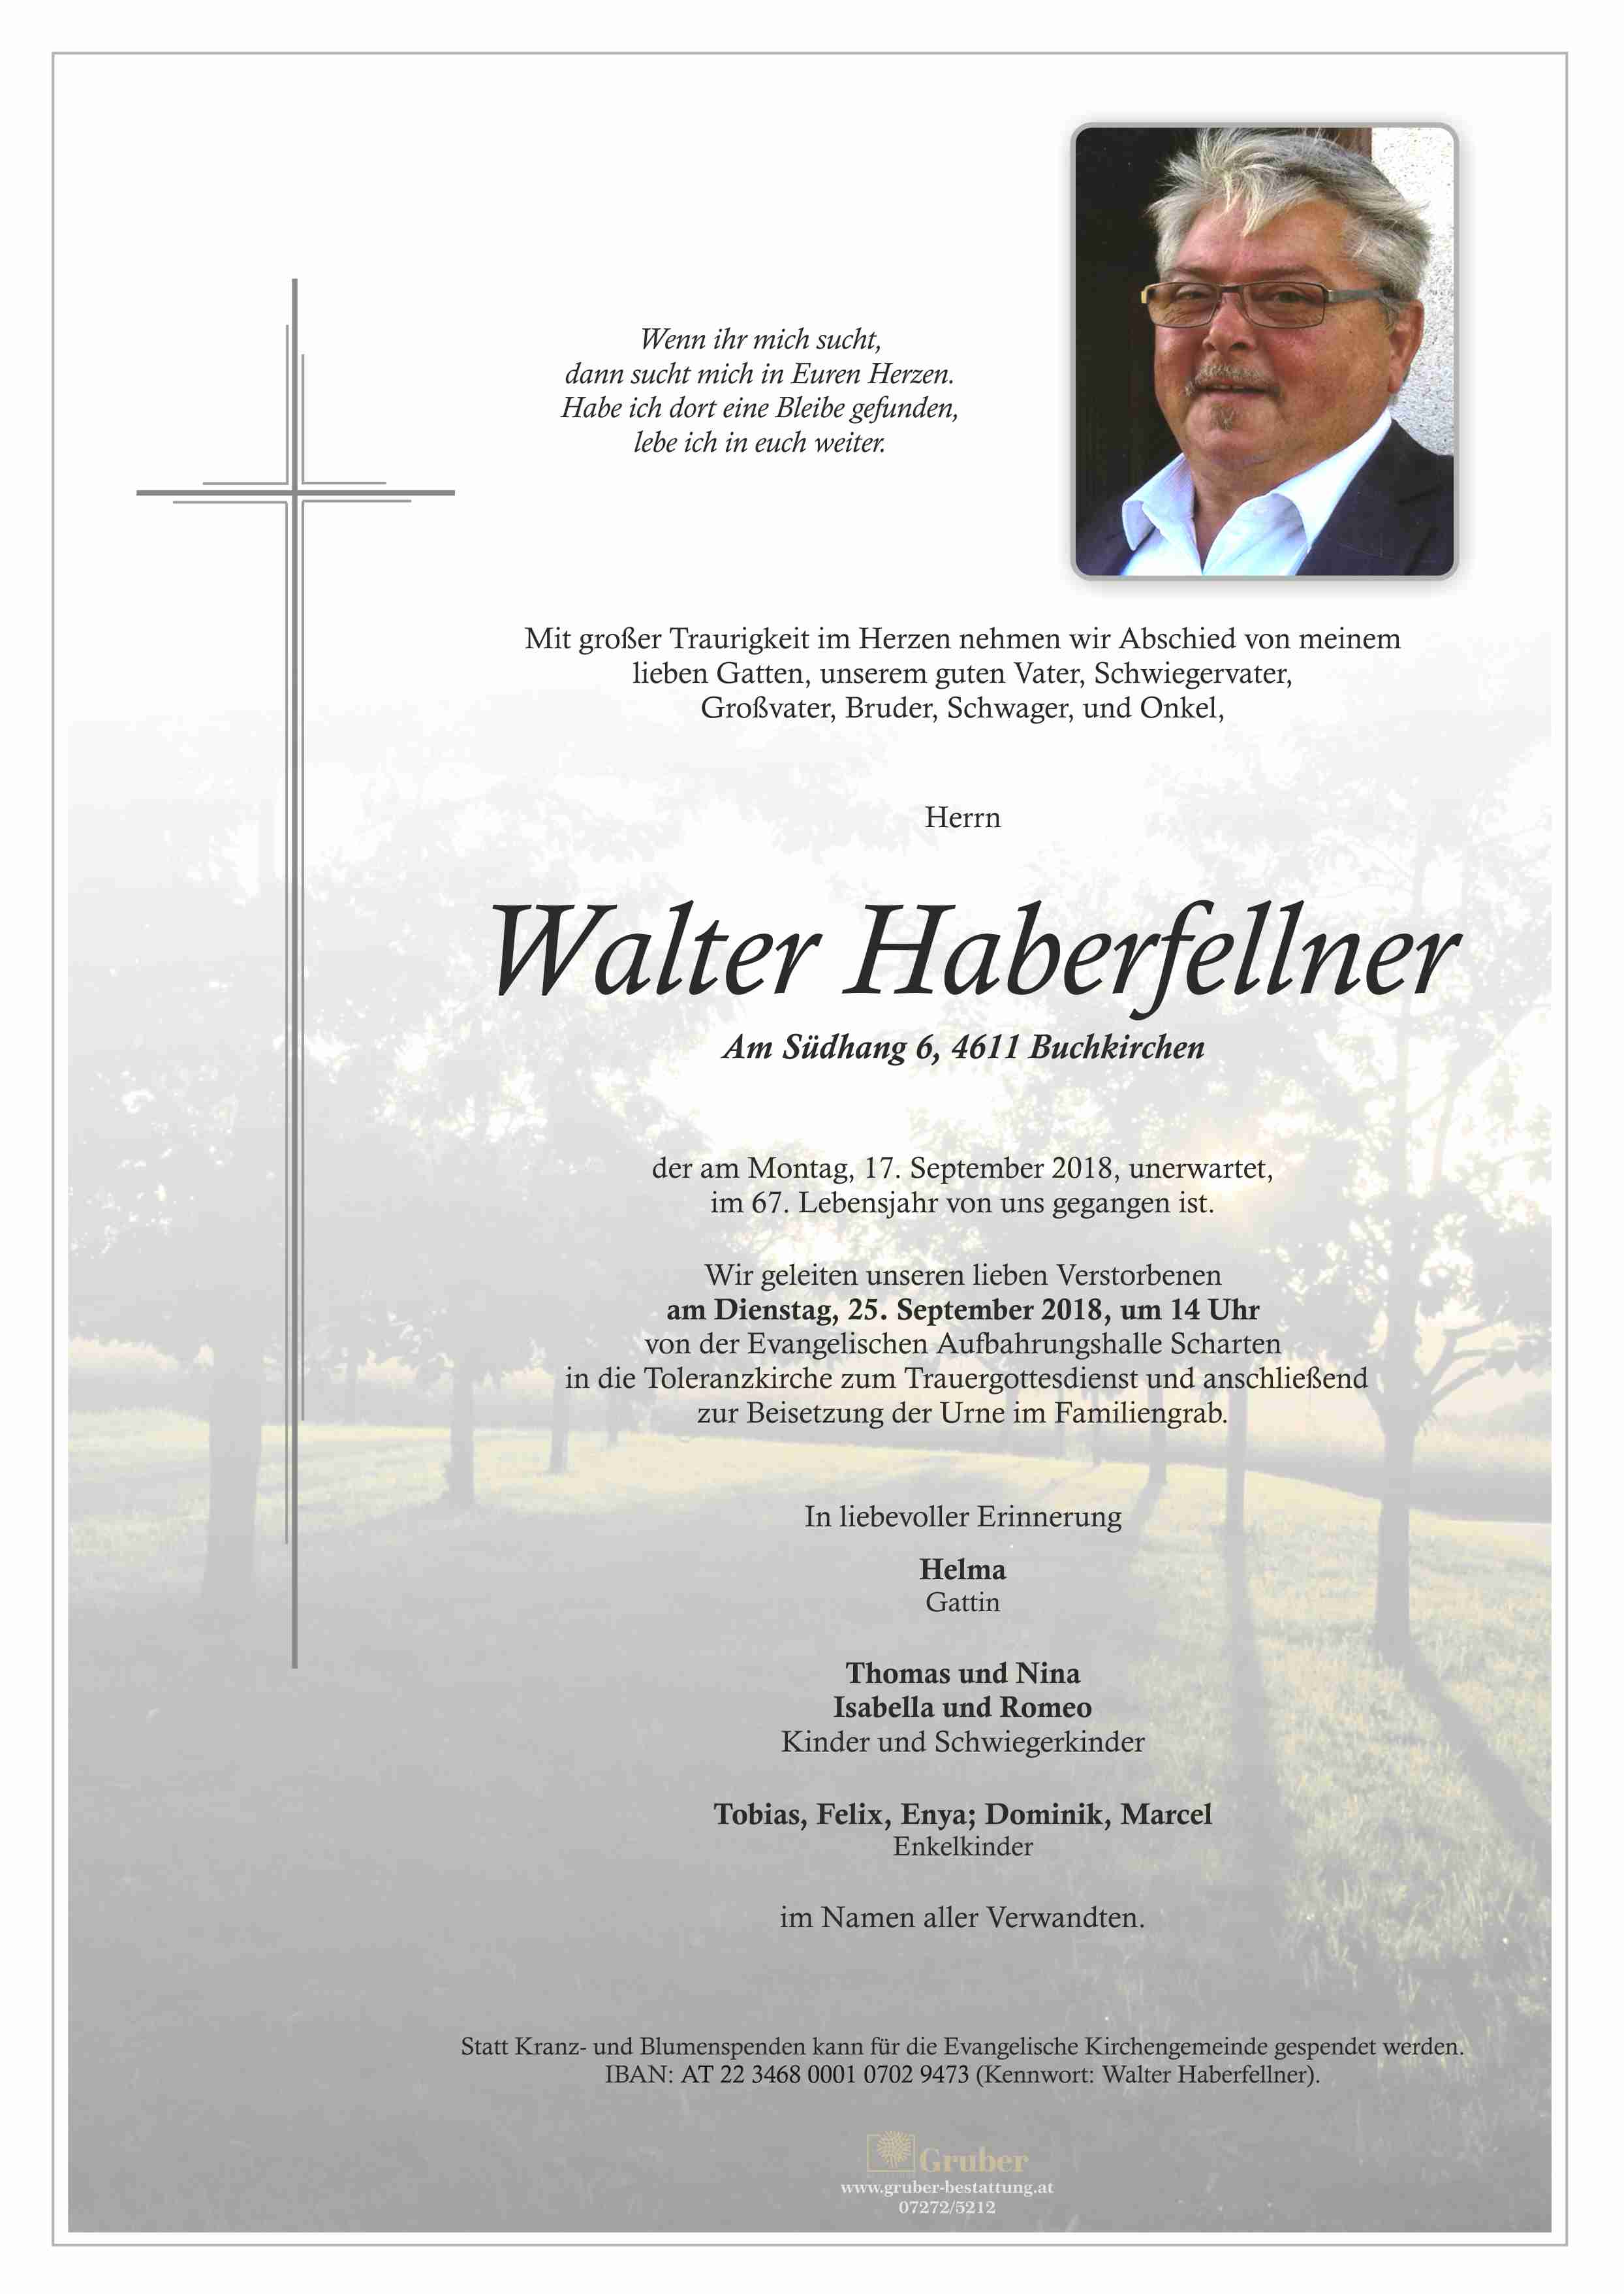 Walter Haberfellner (Scharten Evang.)